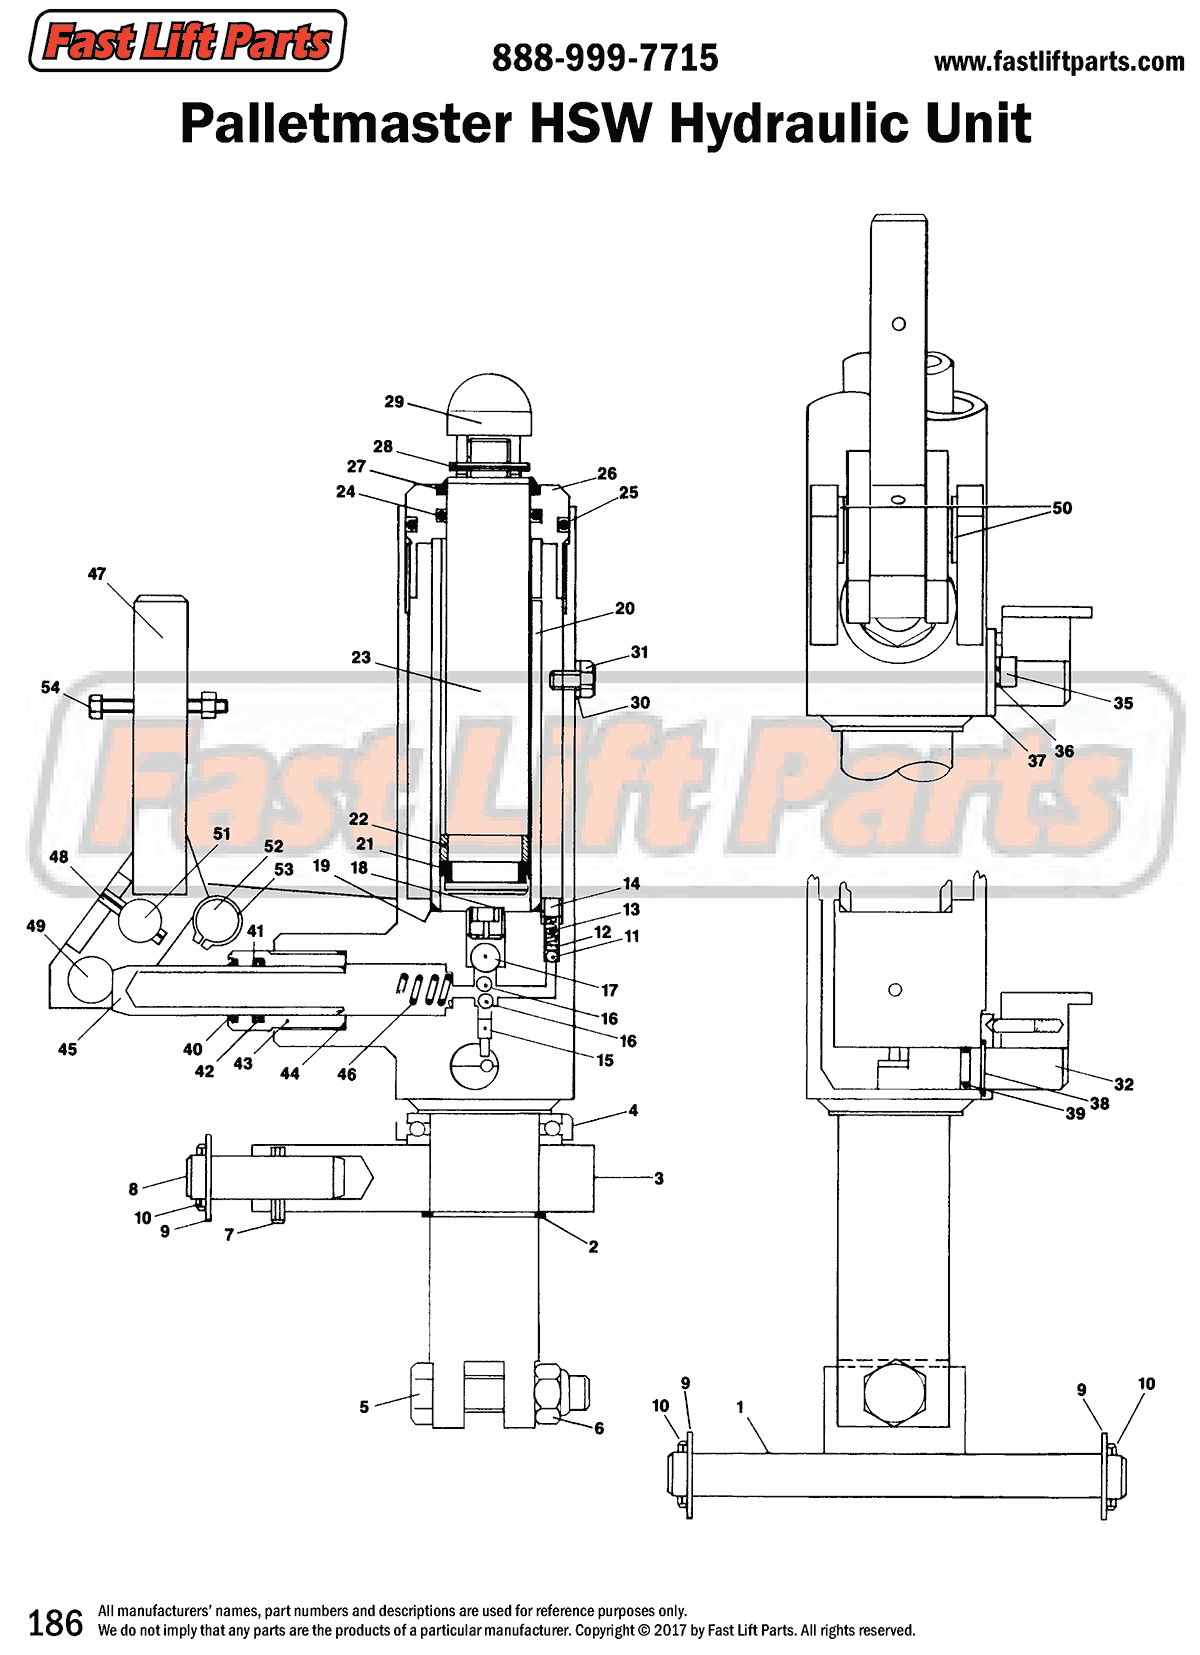 Palletmaster HSW Hydraulic Unit Line Drawing